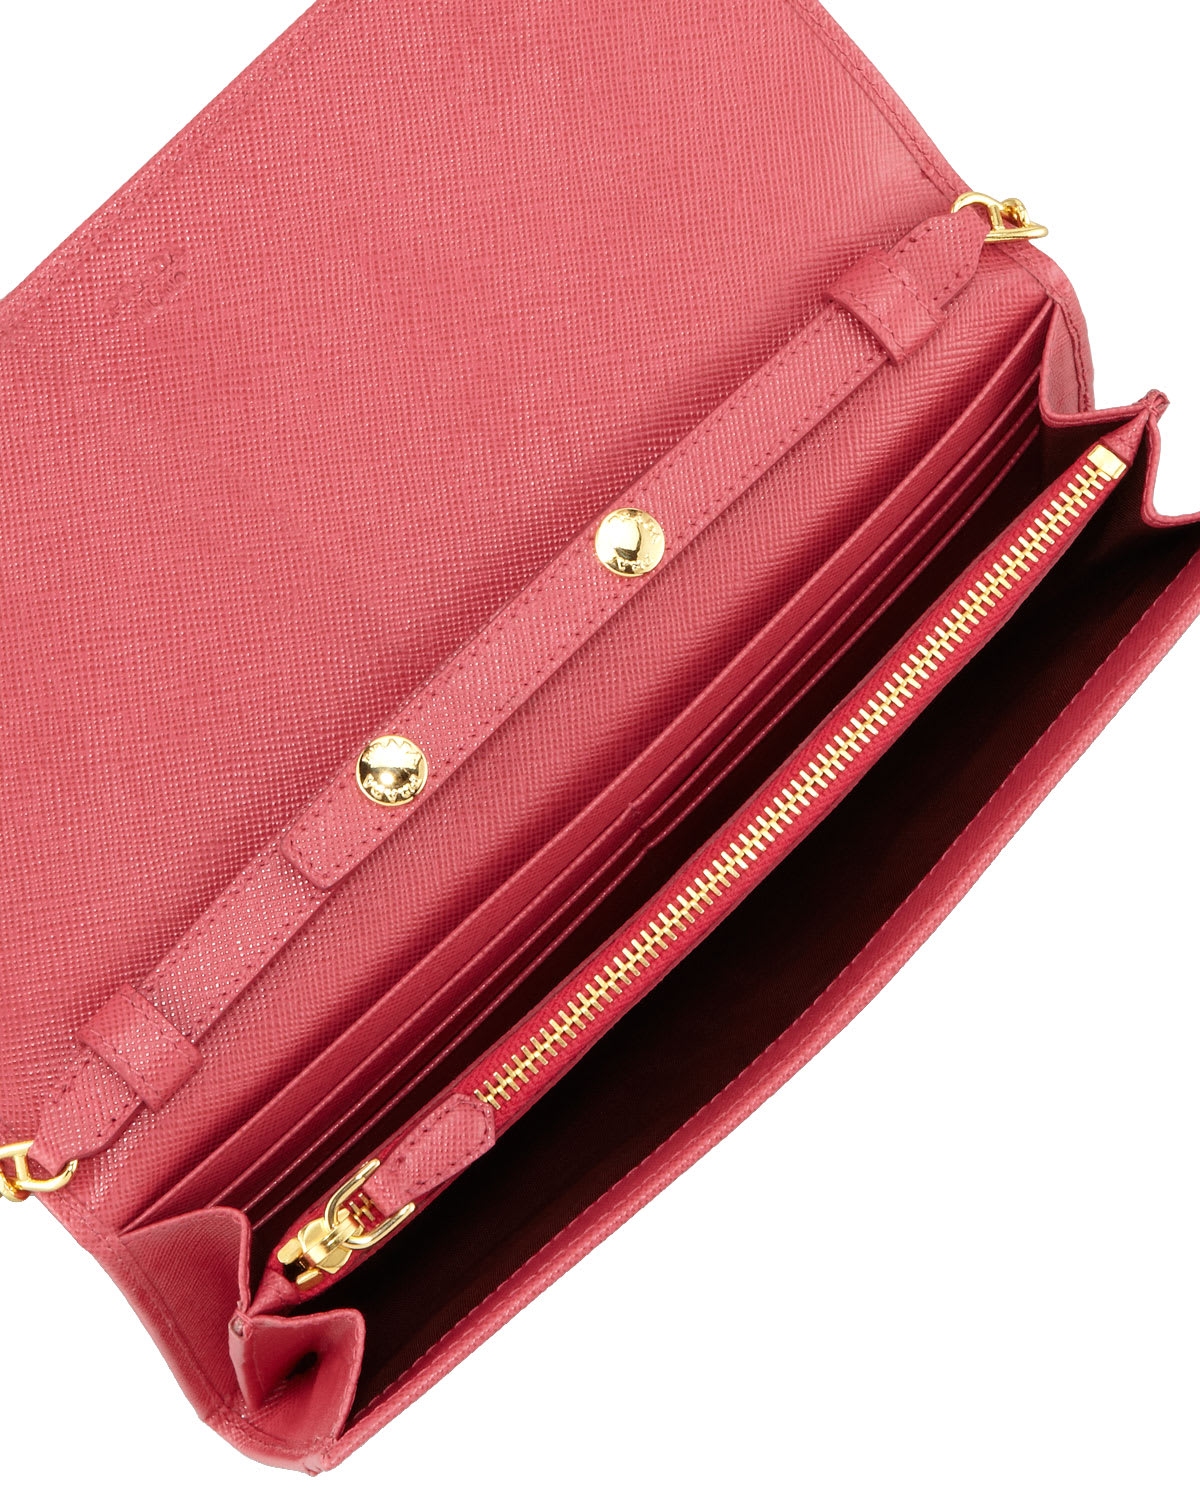 Prada Saffiano Continental Wallet on Chain Bag